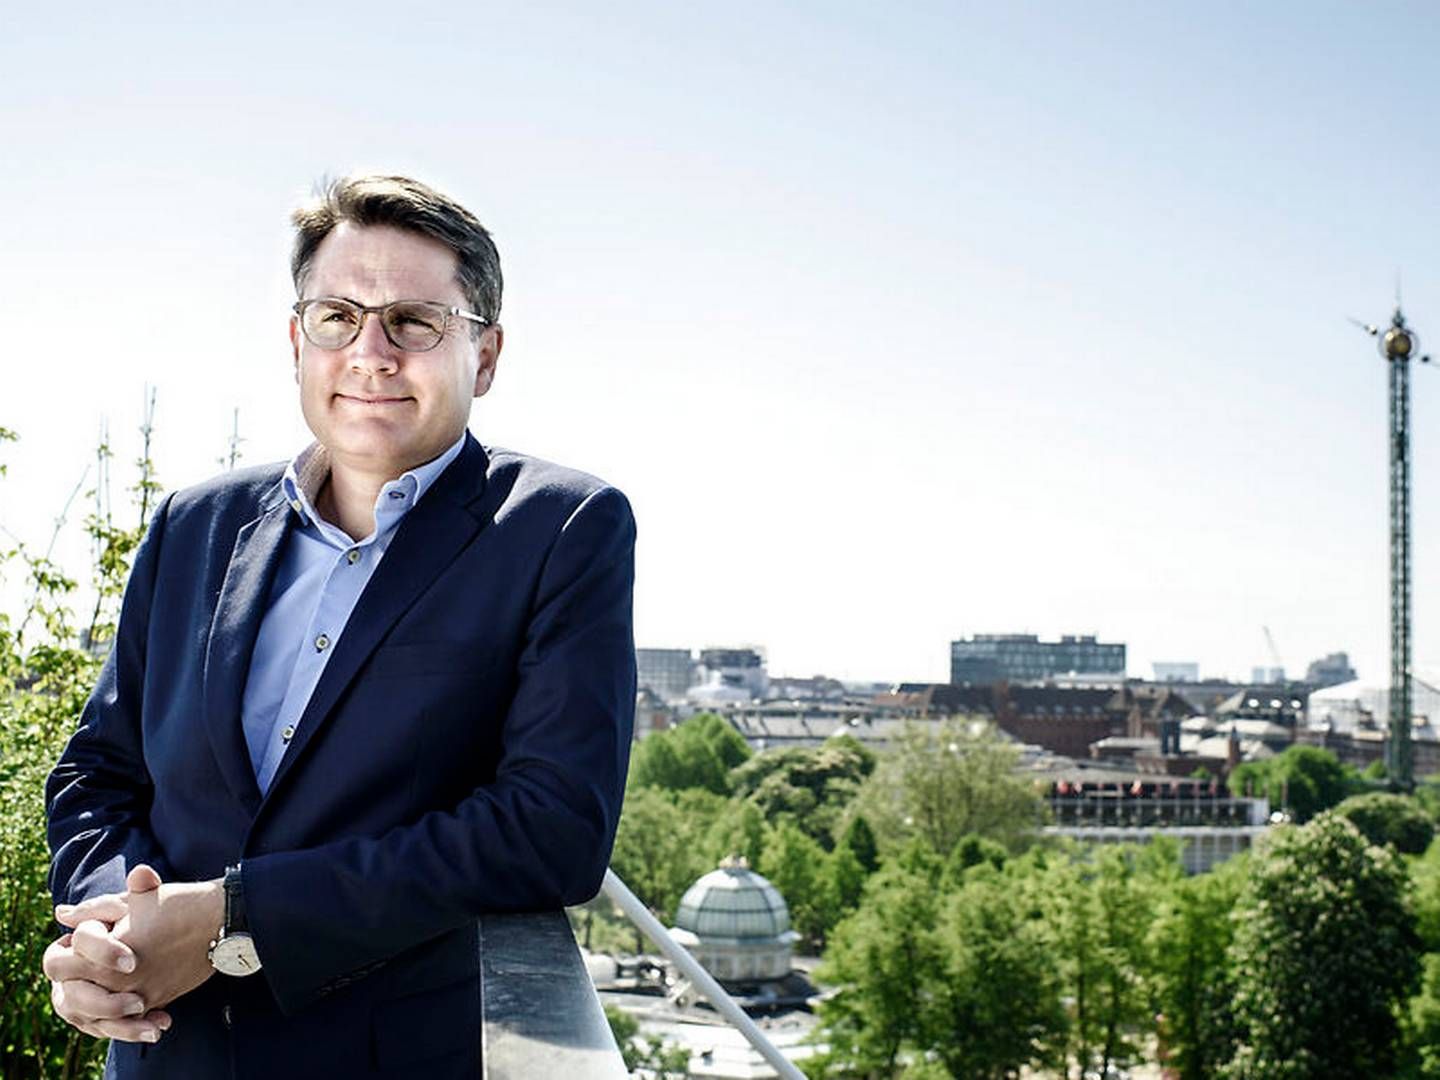 Tidl. ervhervsminister Brian Mikkelsen (K) nuværende direktør for Dansk Erhverv. | Foto: Niels Ahlmann Olesen/Ritzau Scanpix.